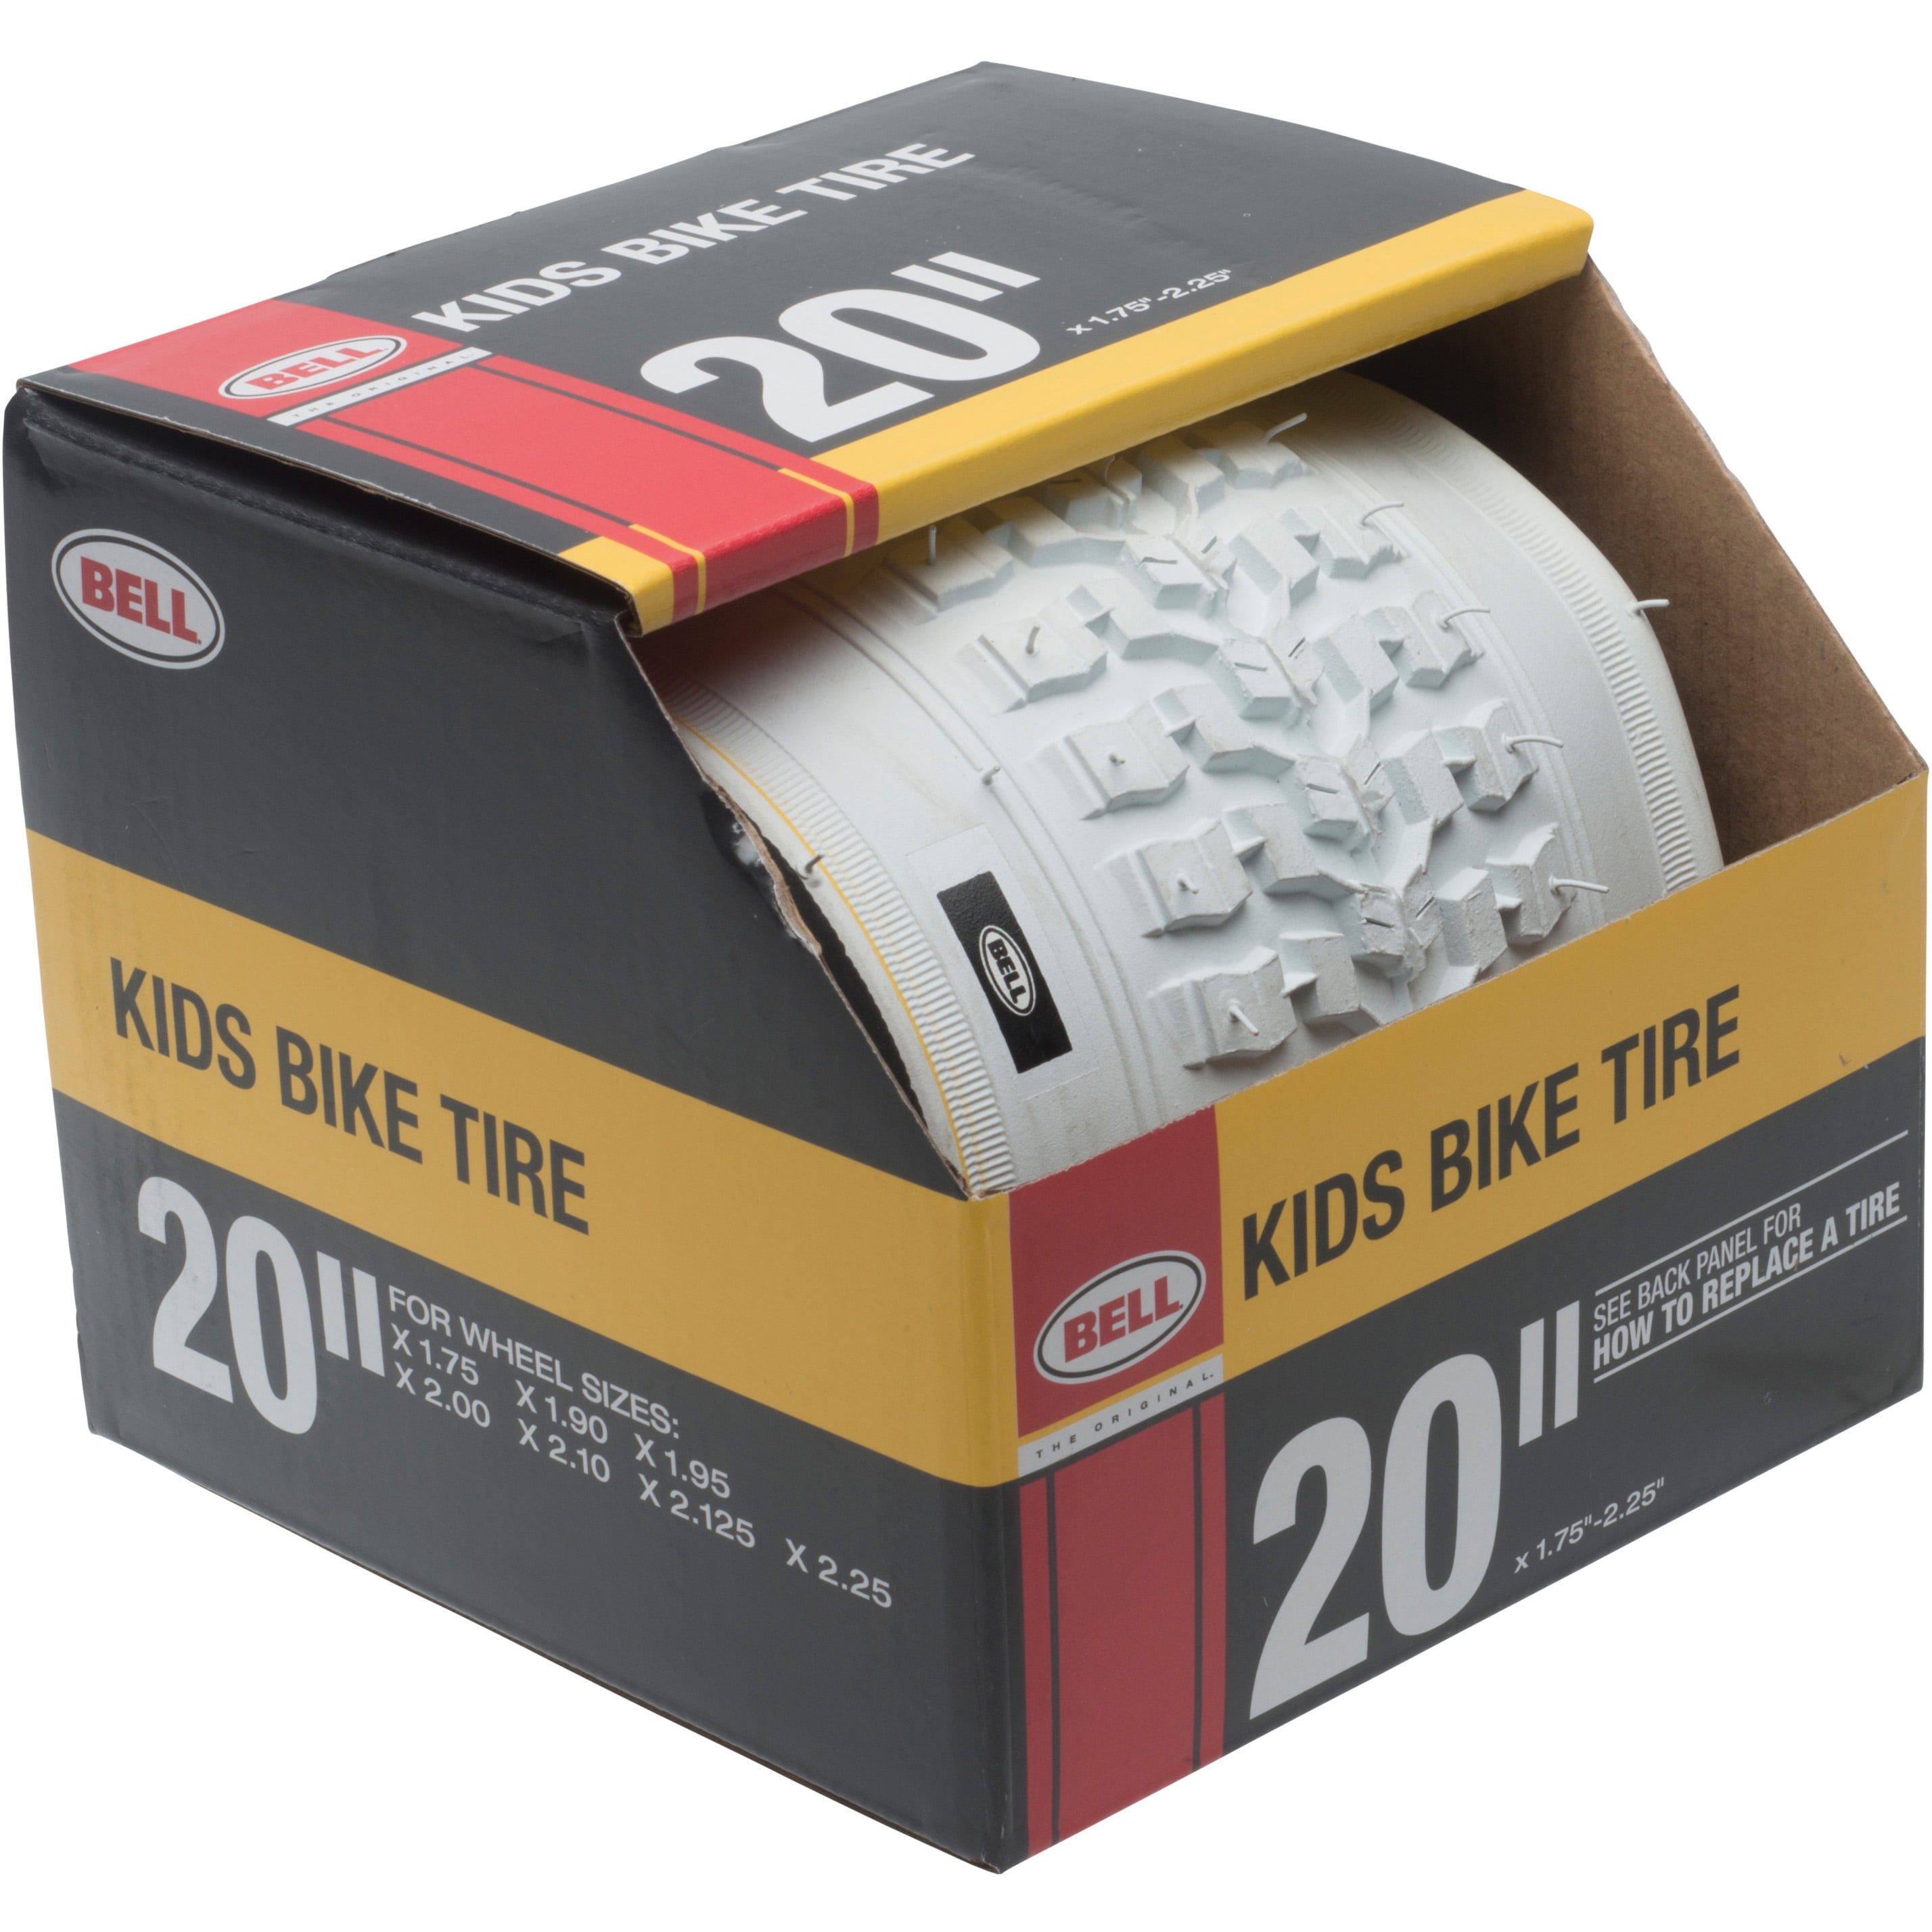 Outdoor Supplies 125 Kids Bike Tire Thicken Outer Tire for Bike Racing Favor Professional 14x2 Random Pattern